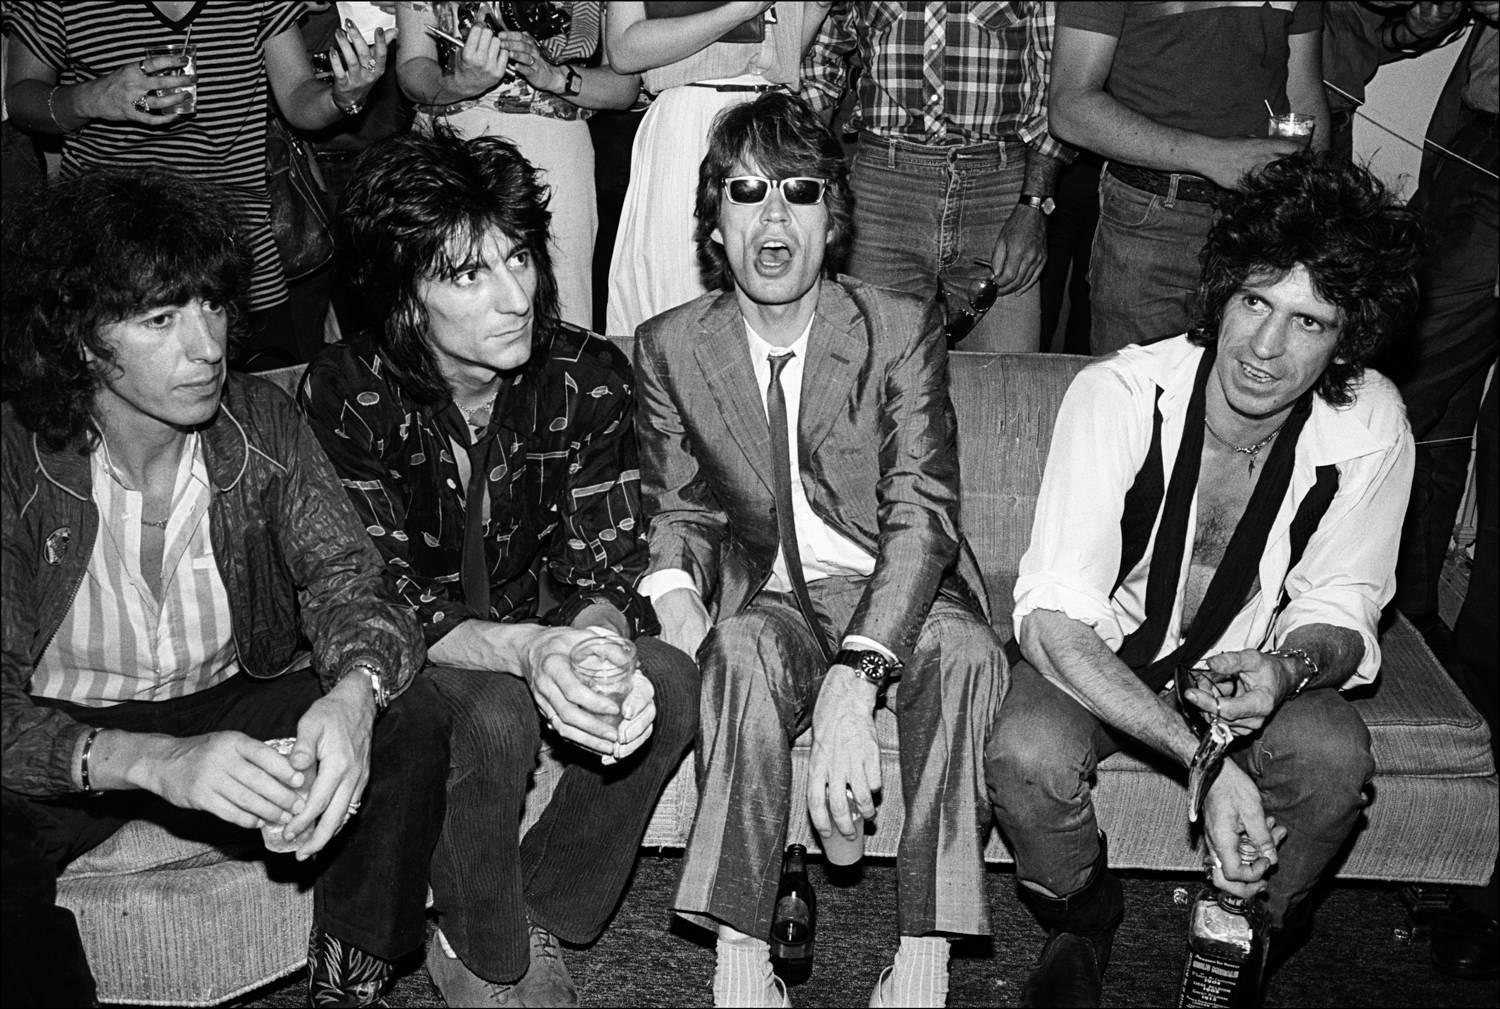 Allan Tannenbaum Black and White Photograph - The Rolling Stones visit Danceteria in New York City, 1980